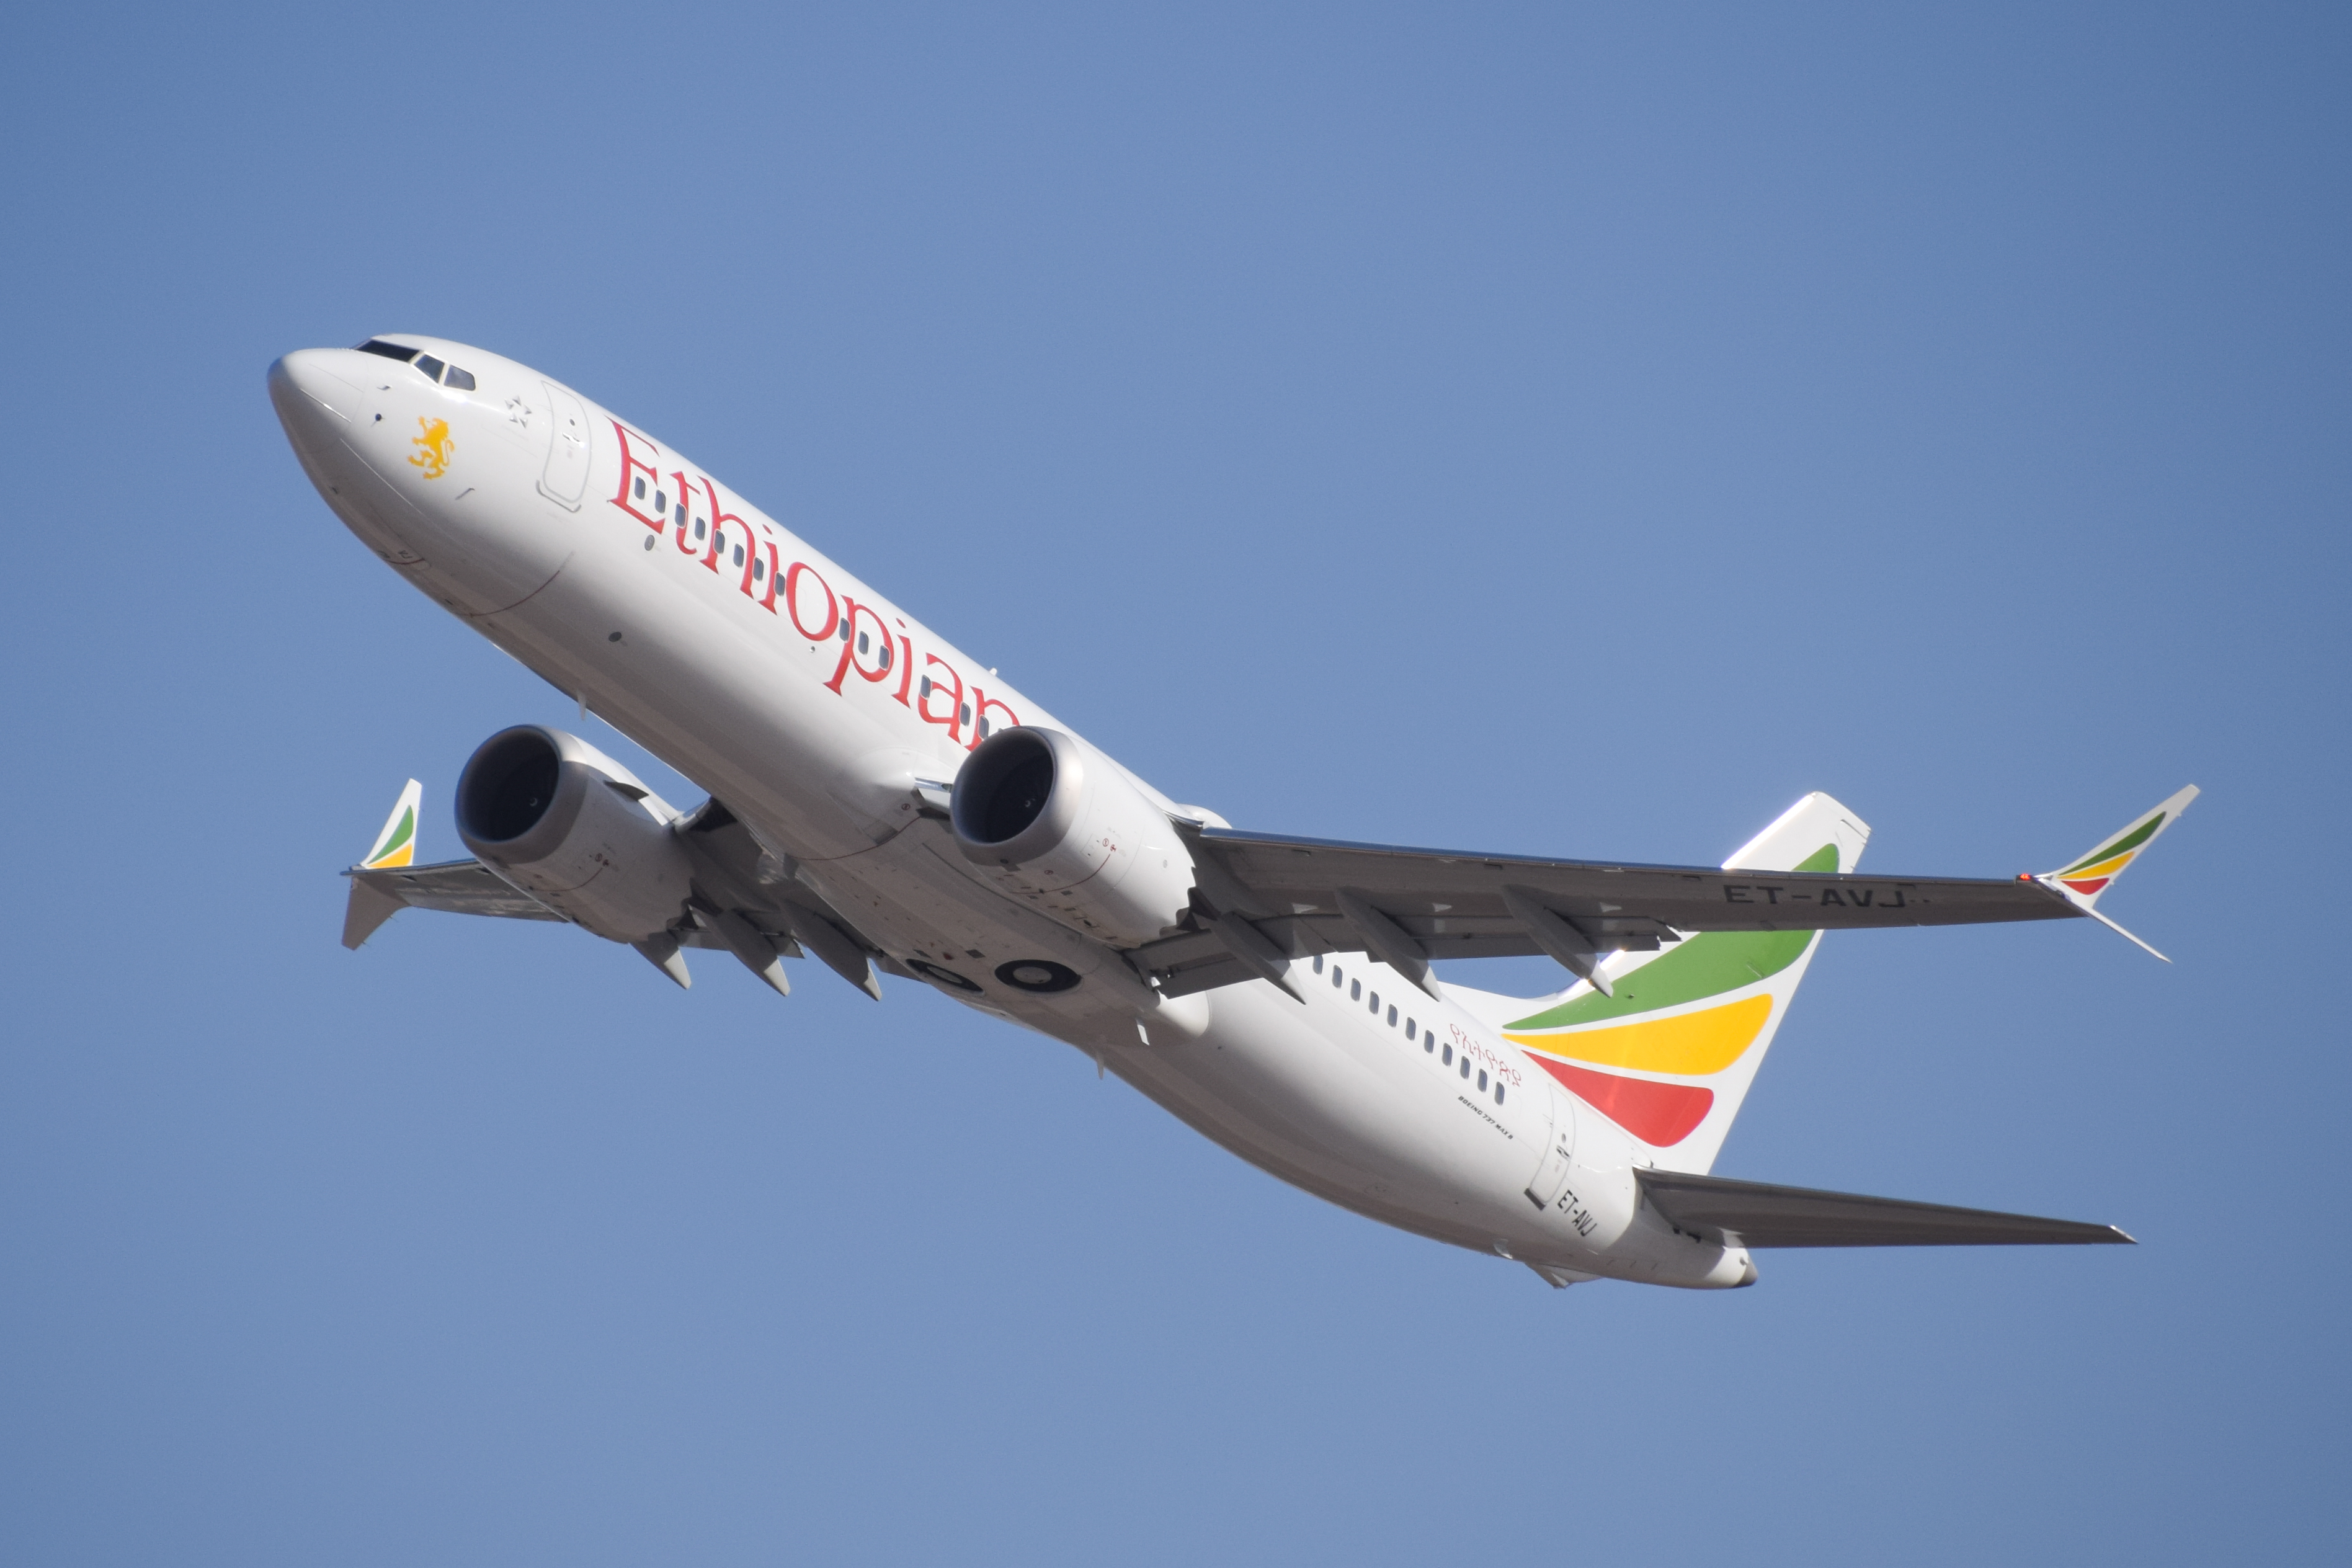 ethiopian_airlines_et-avj_takeoff_from_tlv_46461974574